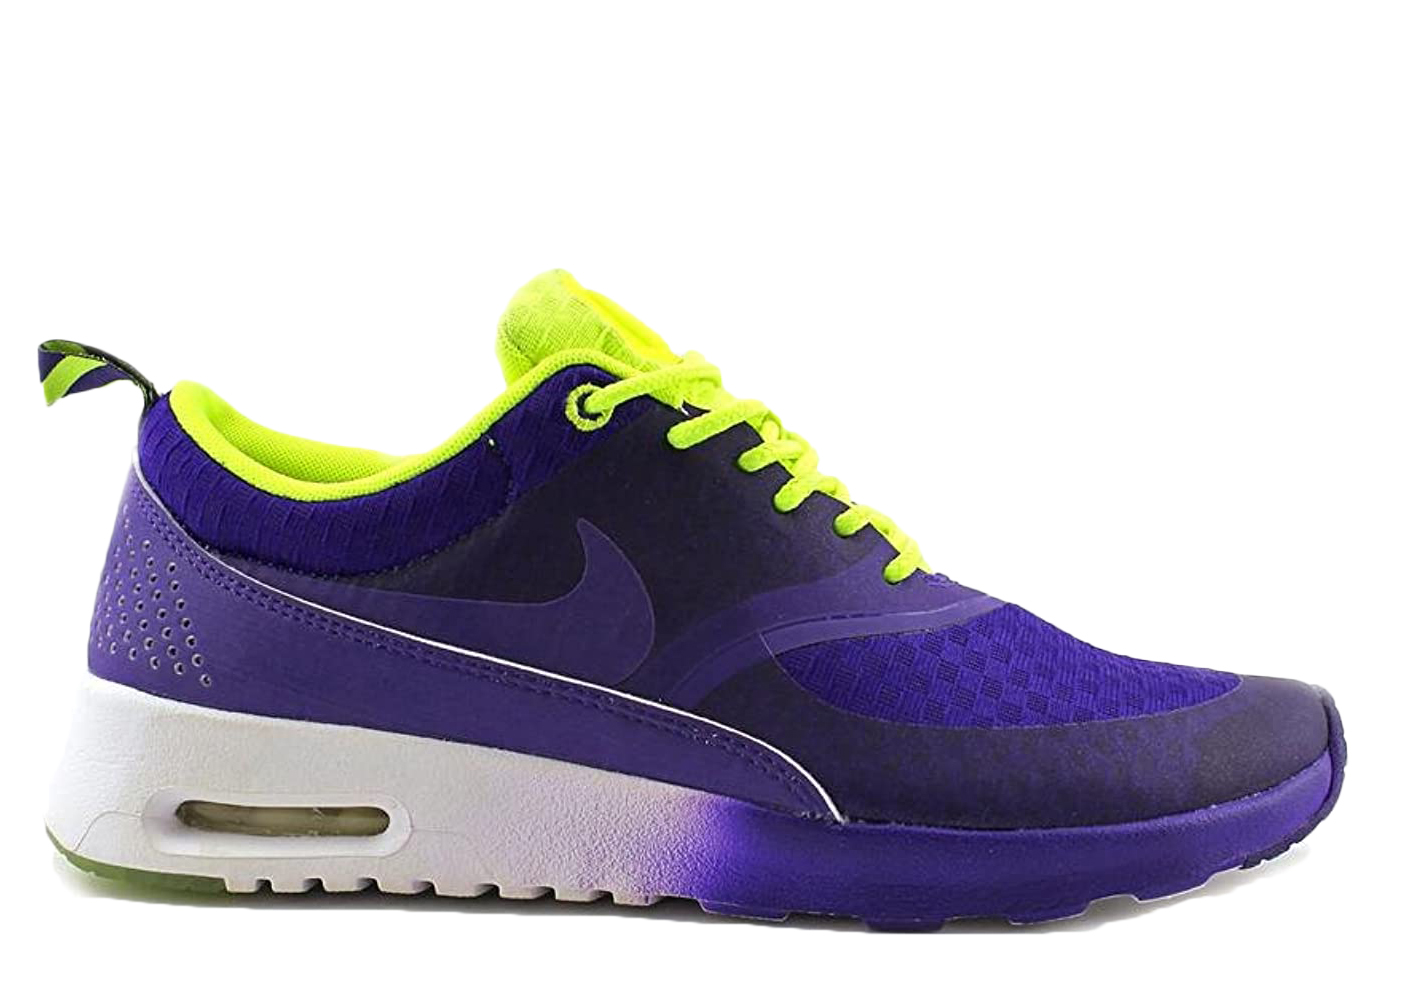 Nike Air Max Thea Electric Purple (Women's) - 627249-500 - US